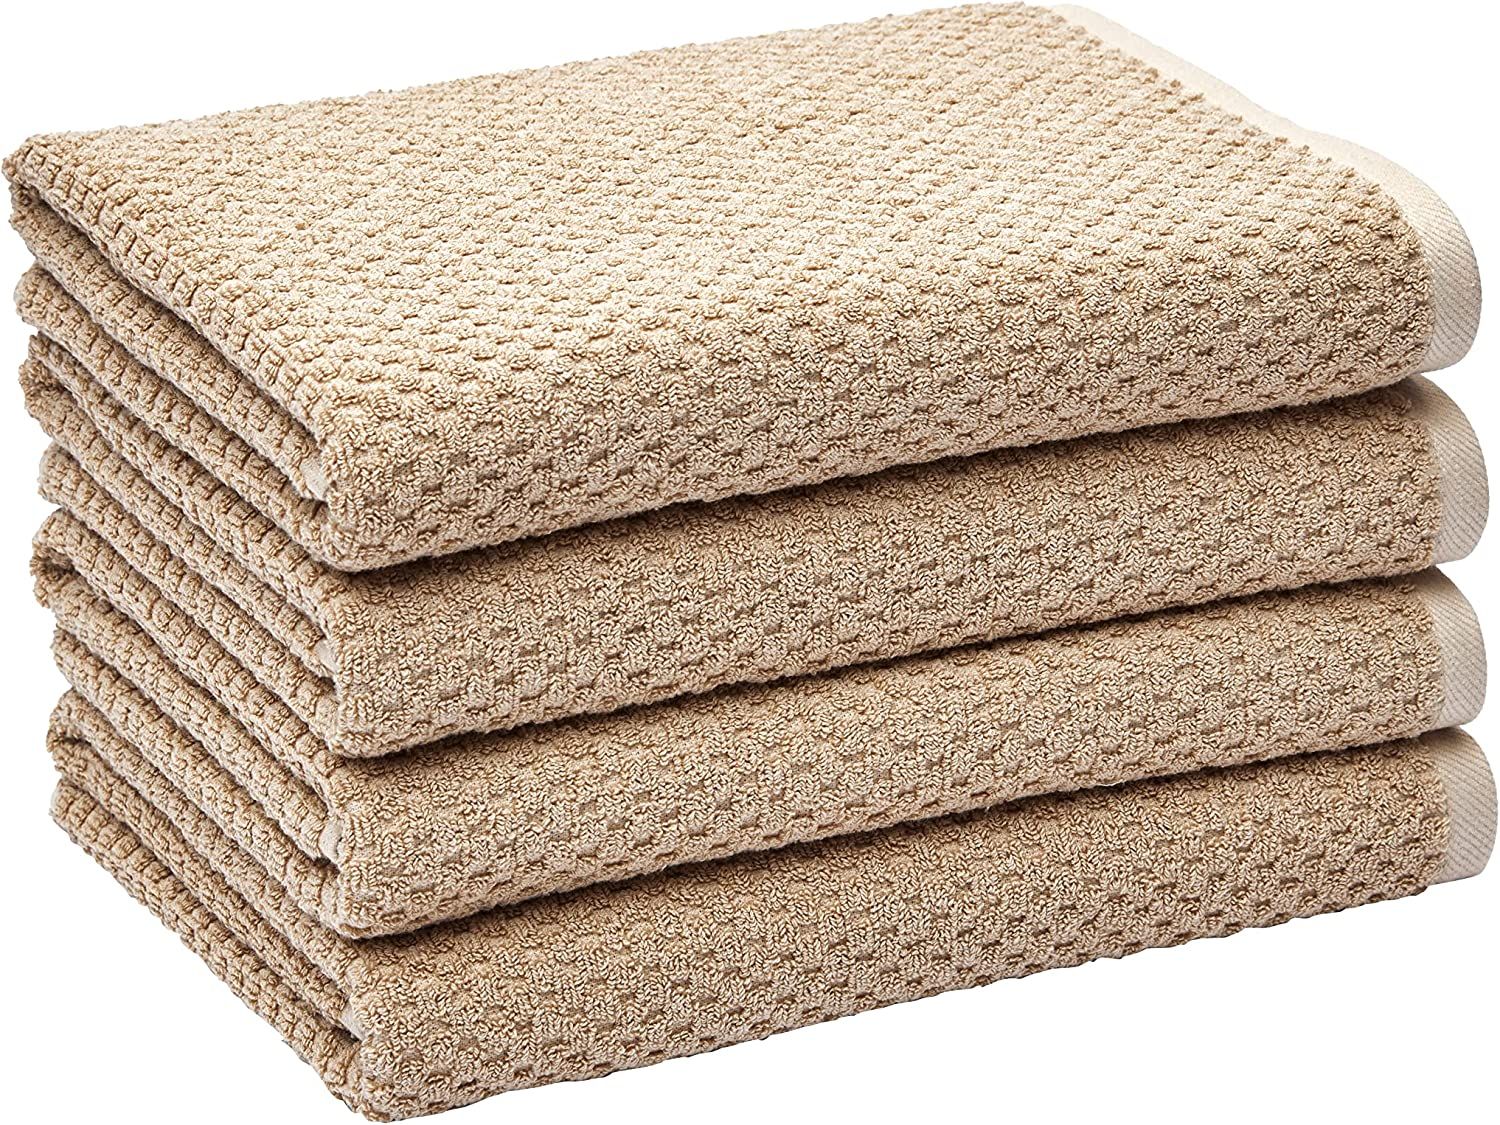 Amazon Basics Odor Resistant Textured Bath Towel, 30 x 54 Inches - 4-Pack, Beige | Amazon (US)